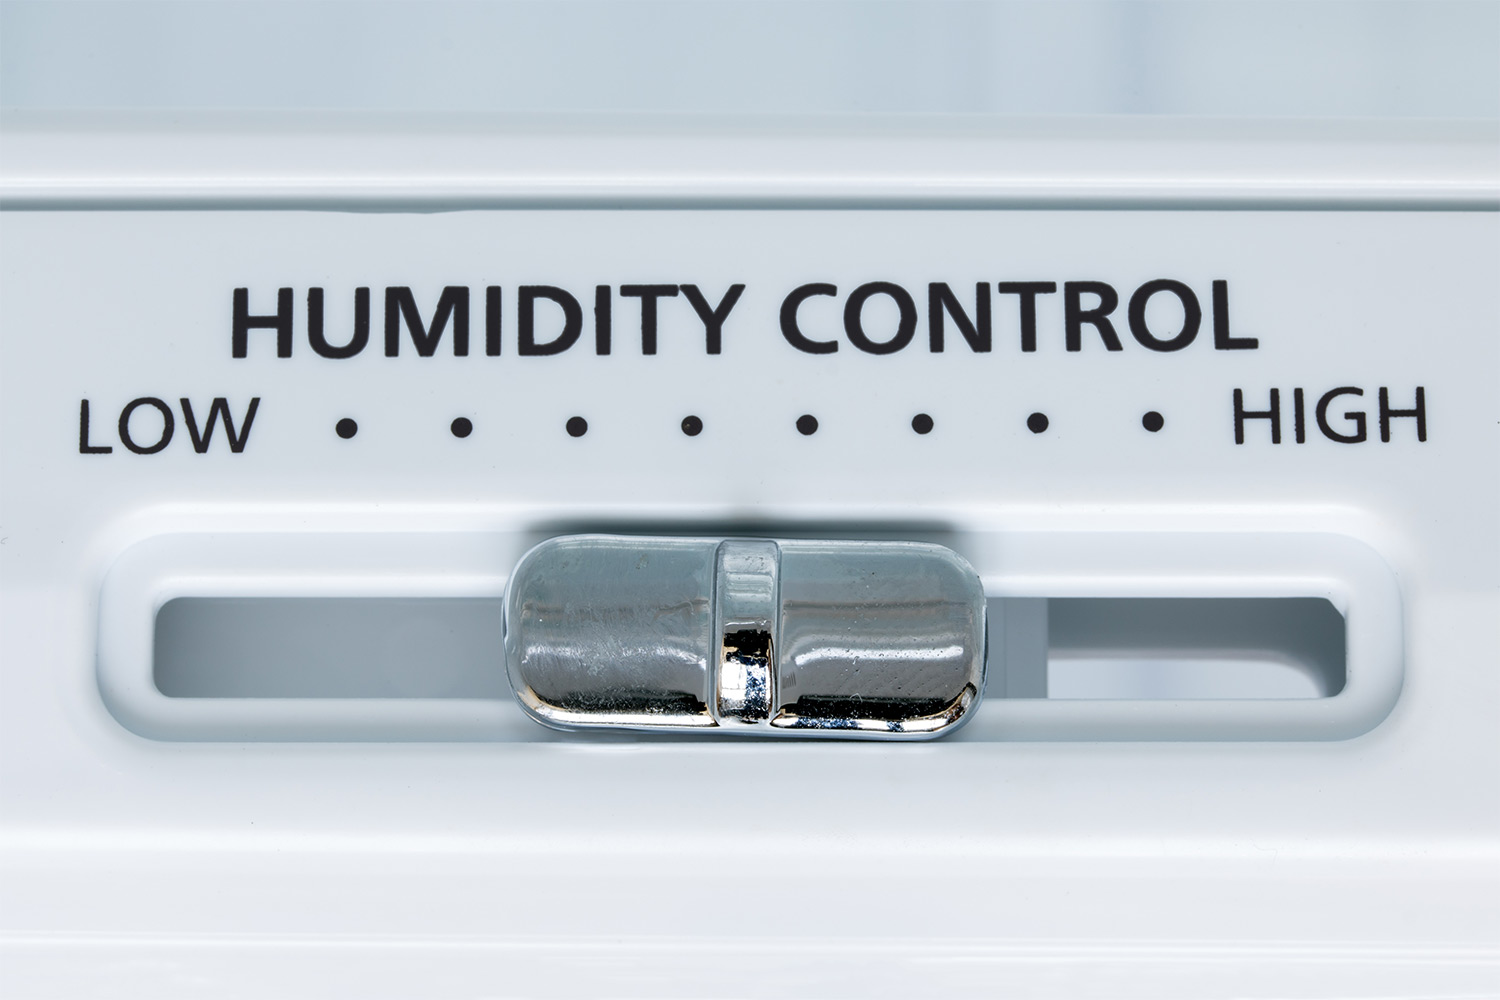 Humidity control